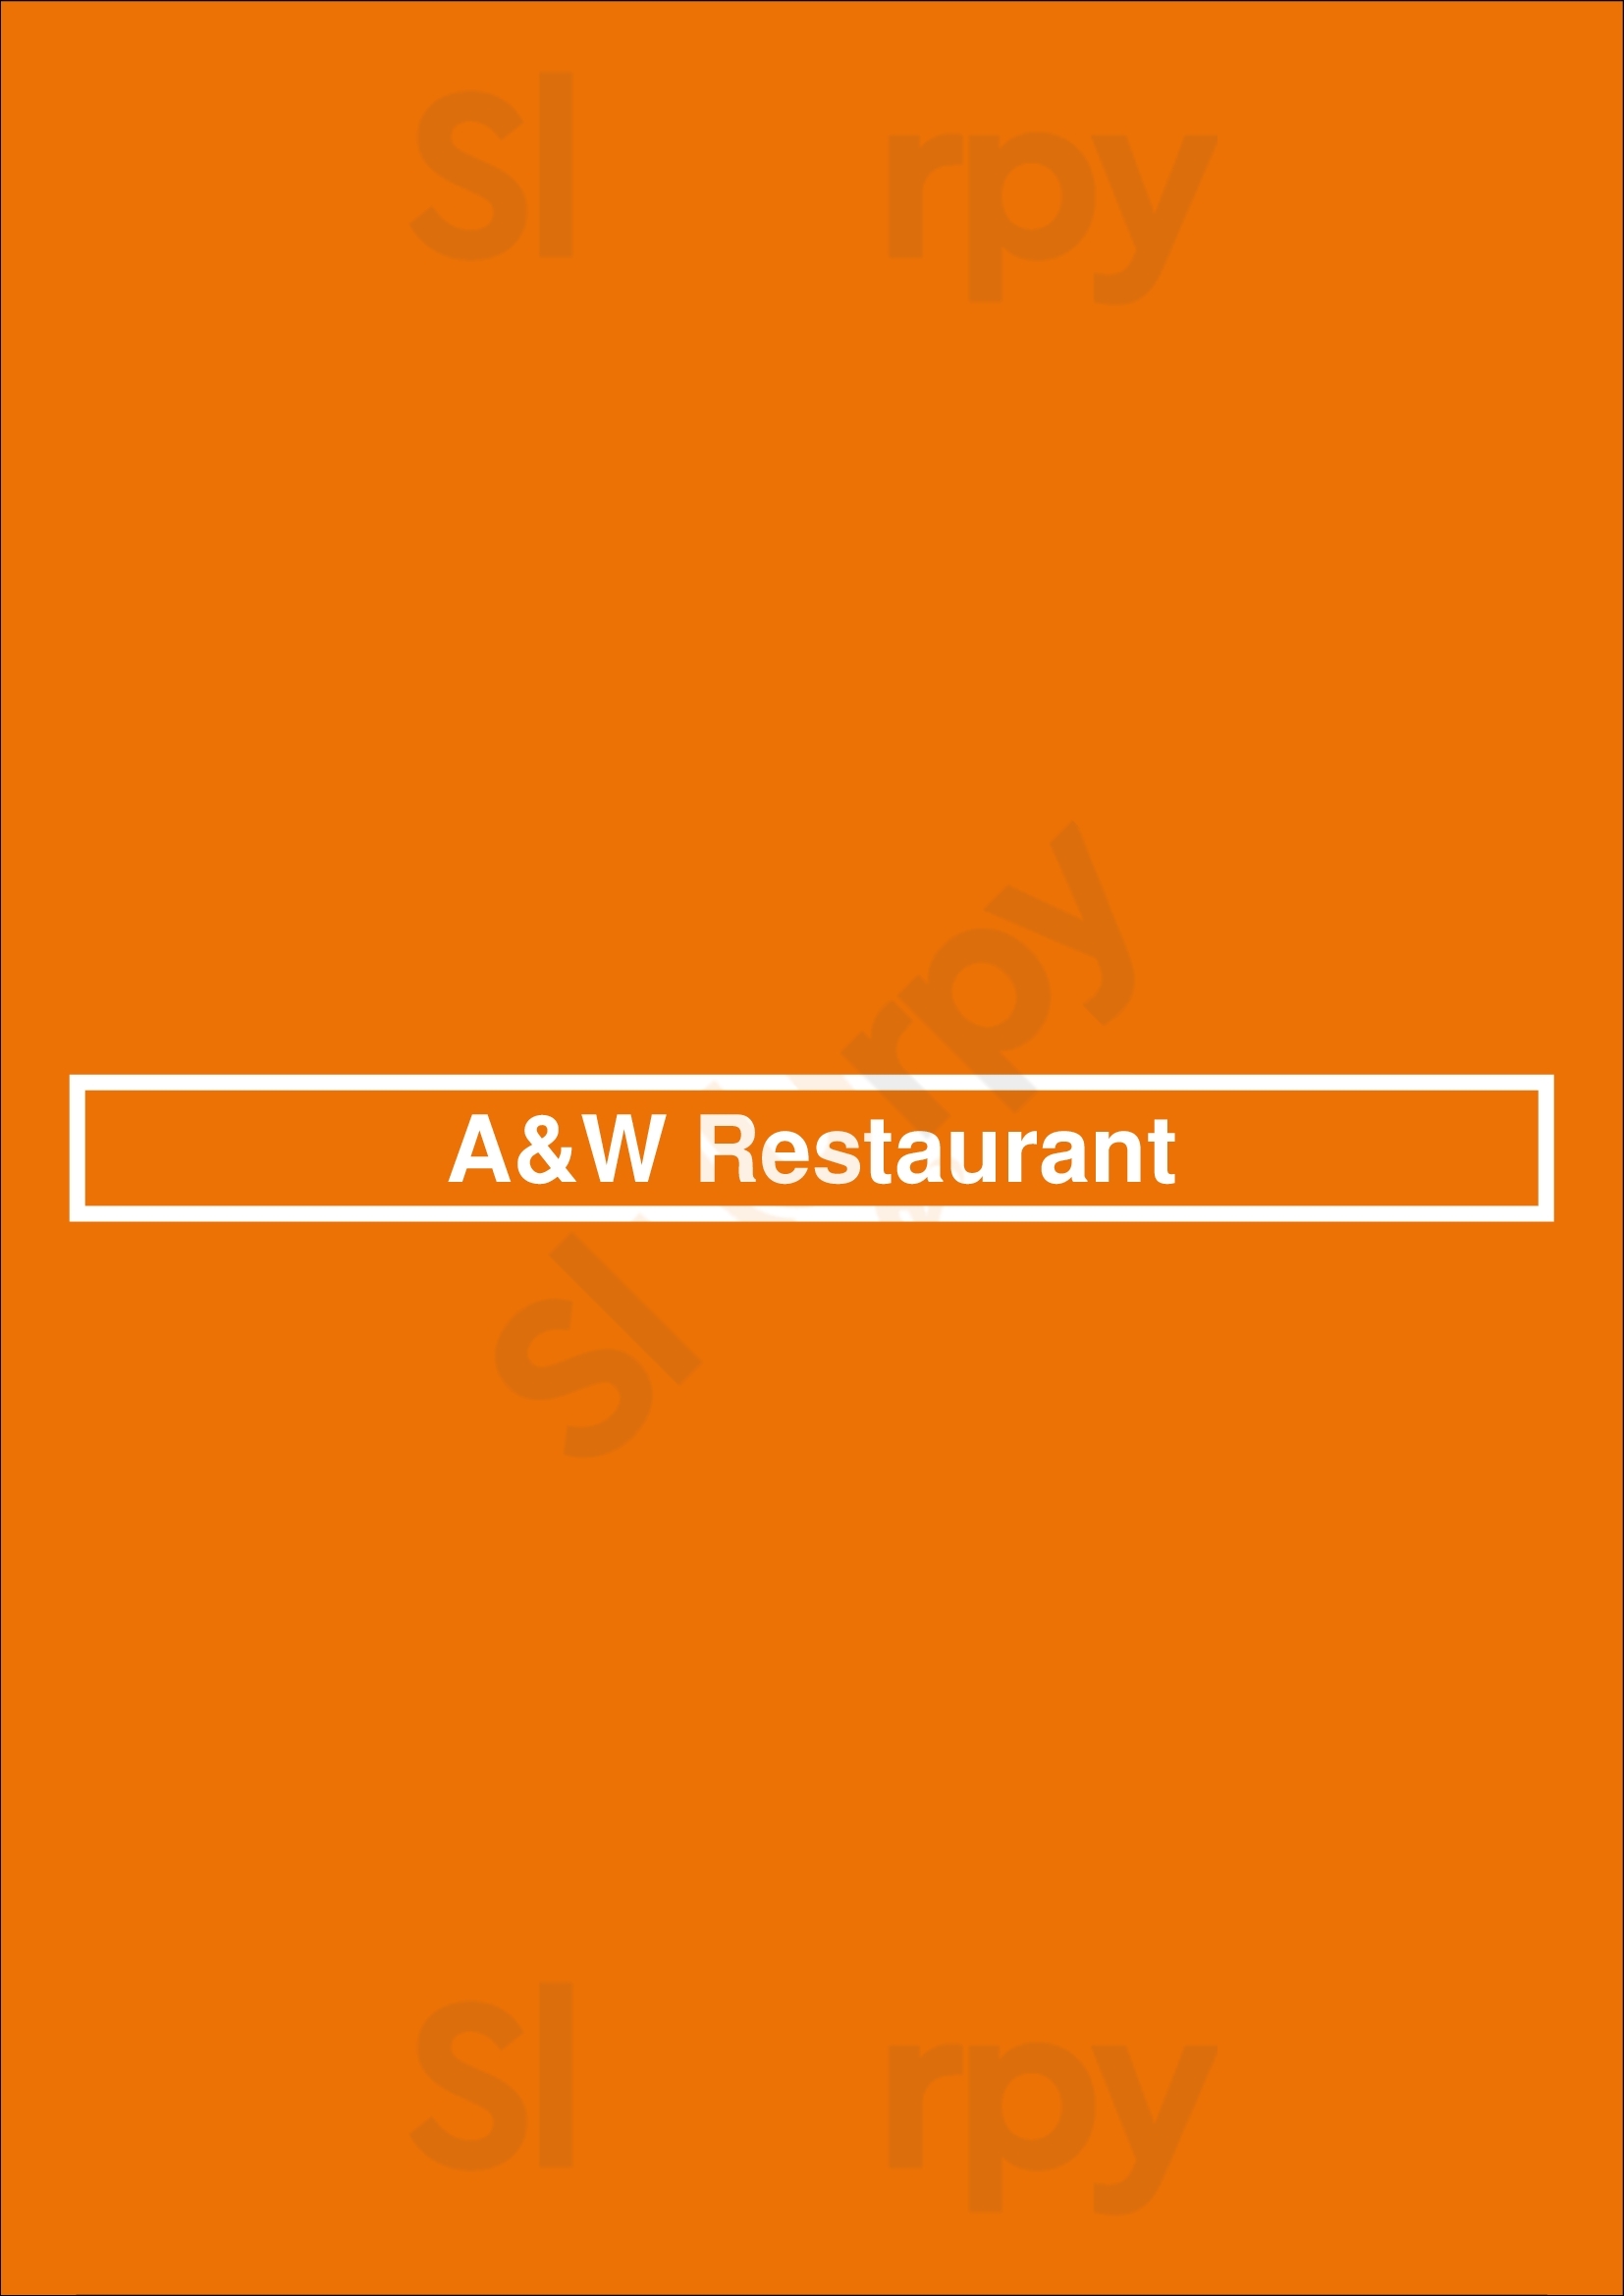 A&w Restaurant Sherwood Park Menu - 1